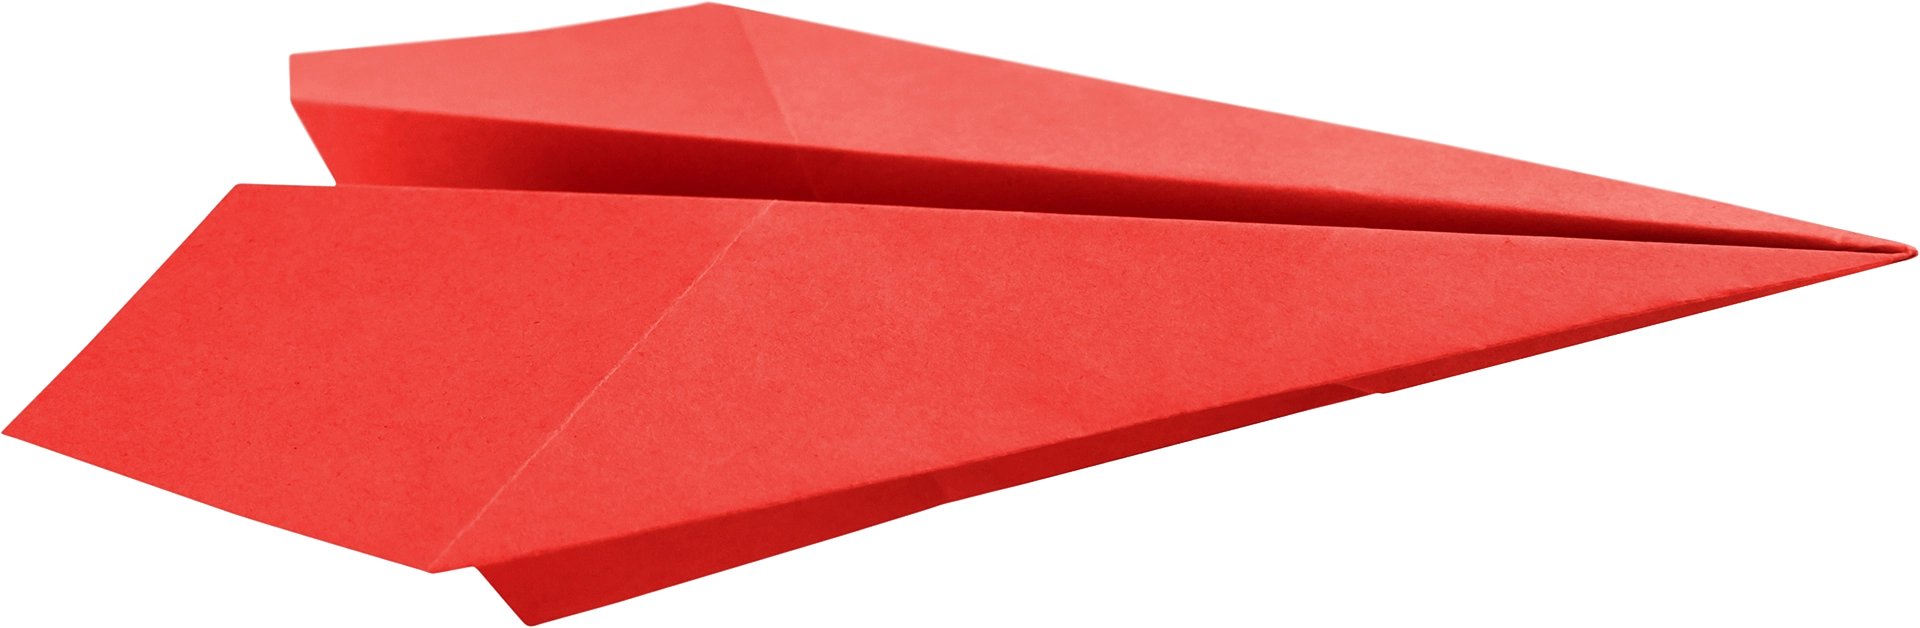 Scholz Paperplane